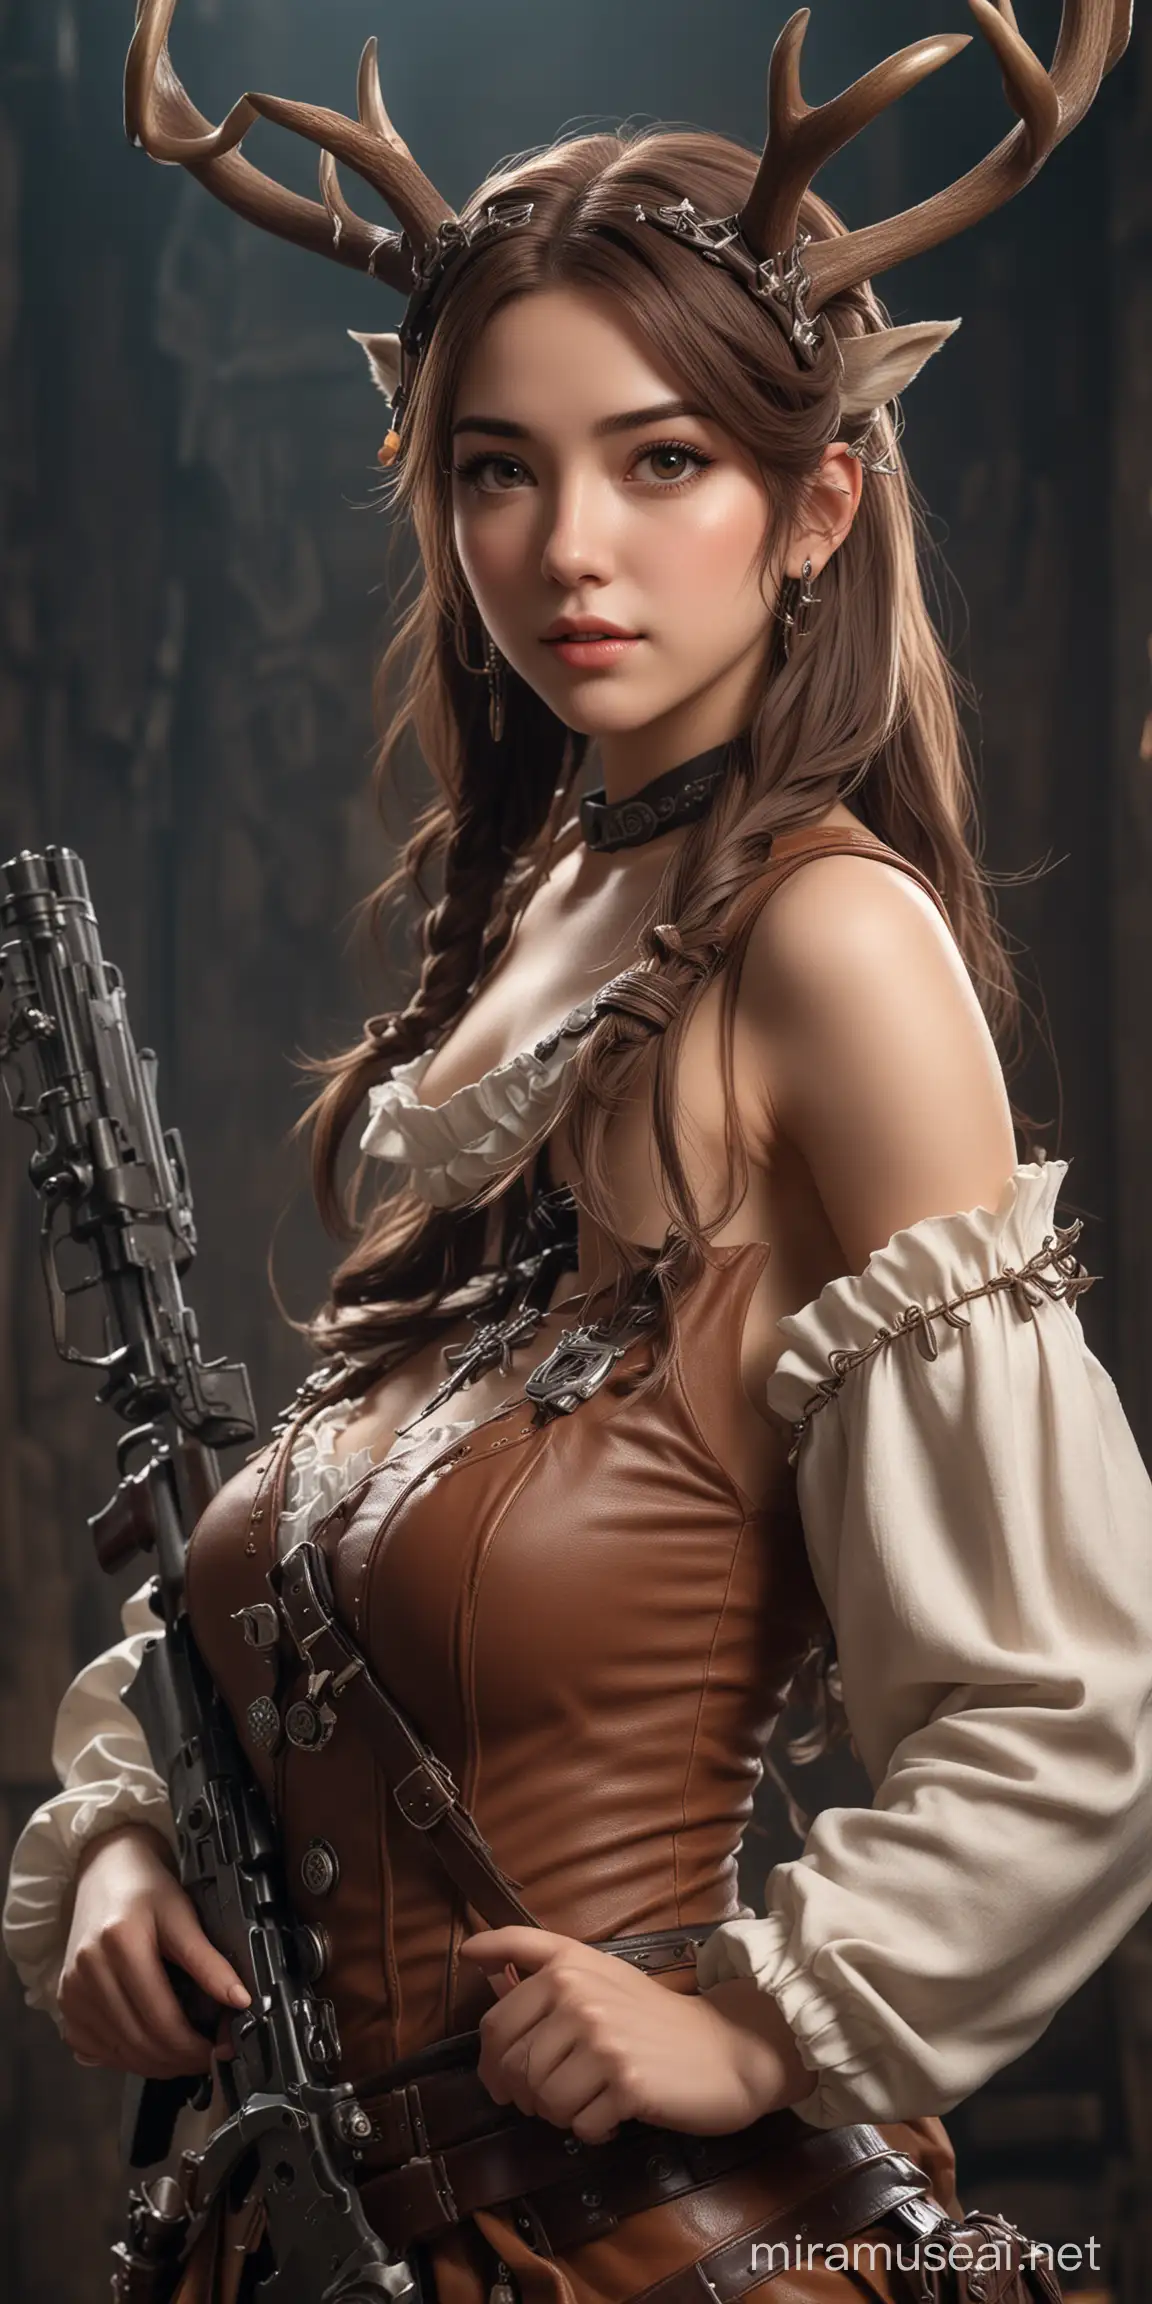 Realistic Deer Element Gunslinger Idol Girl in Fantasy Isekai Setting